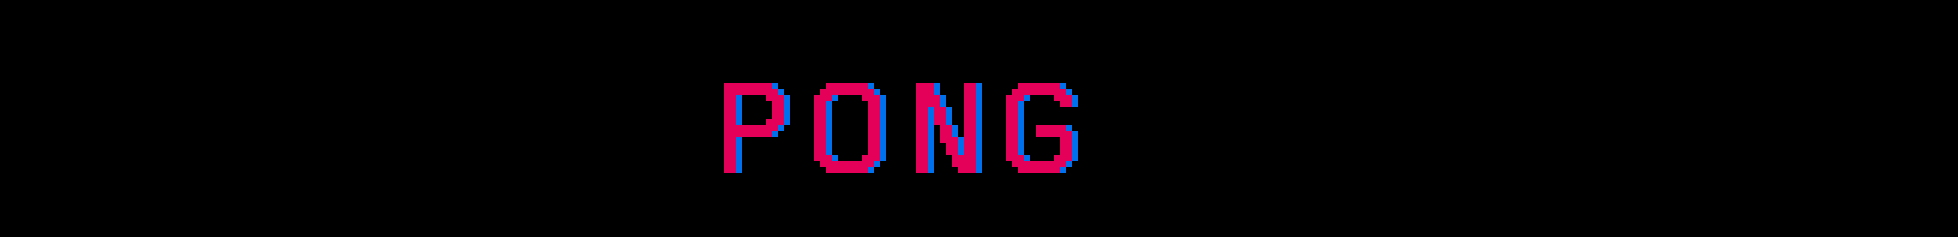 NES Pong